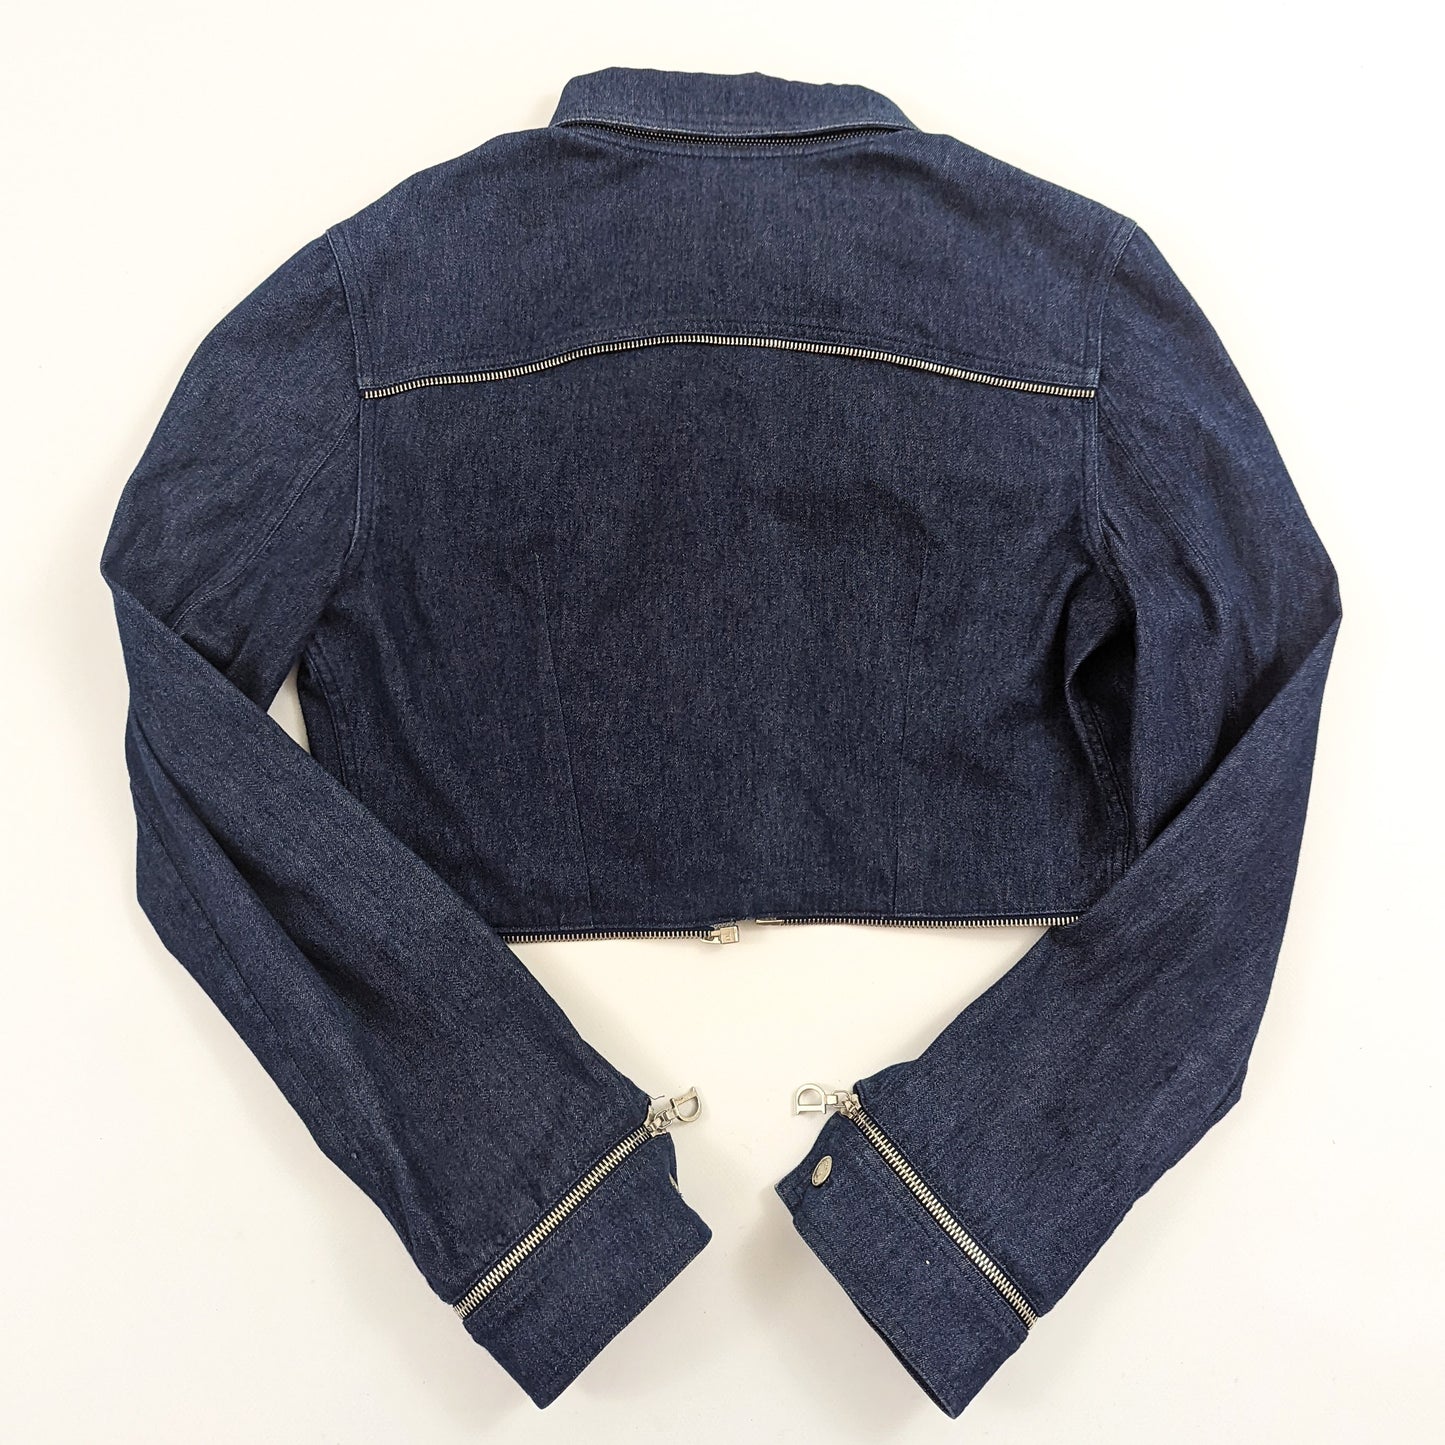 Dior denim jacket by Galliano - S/S 2001 -